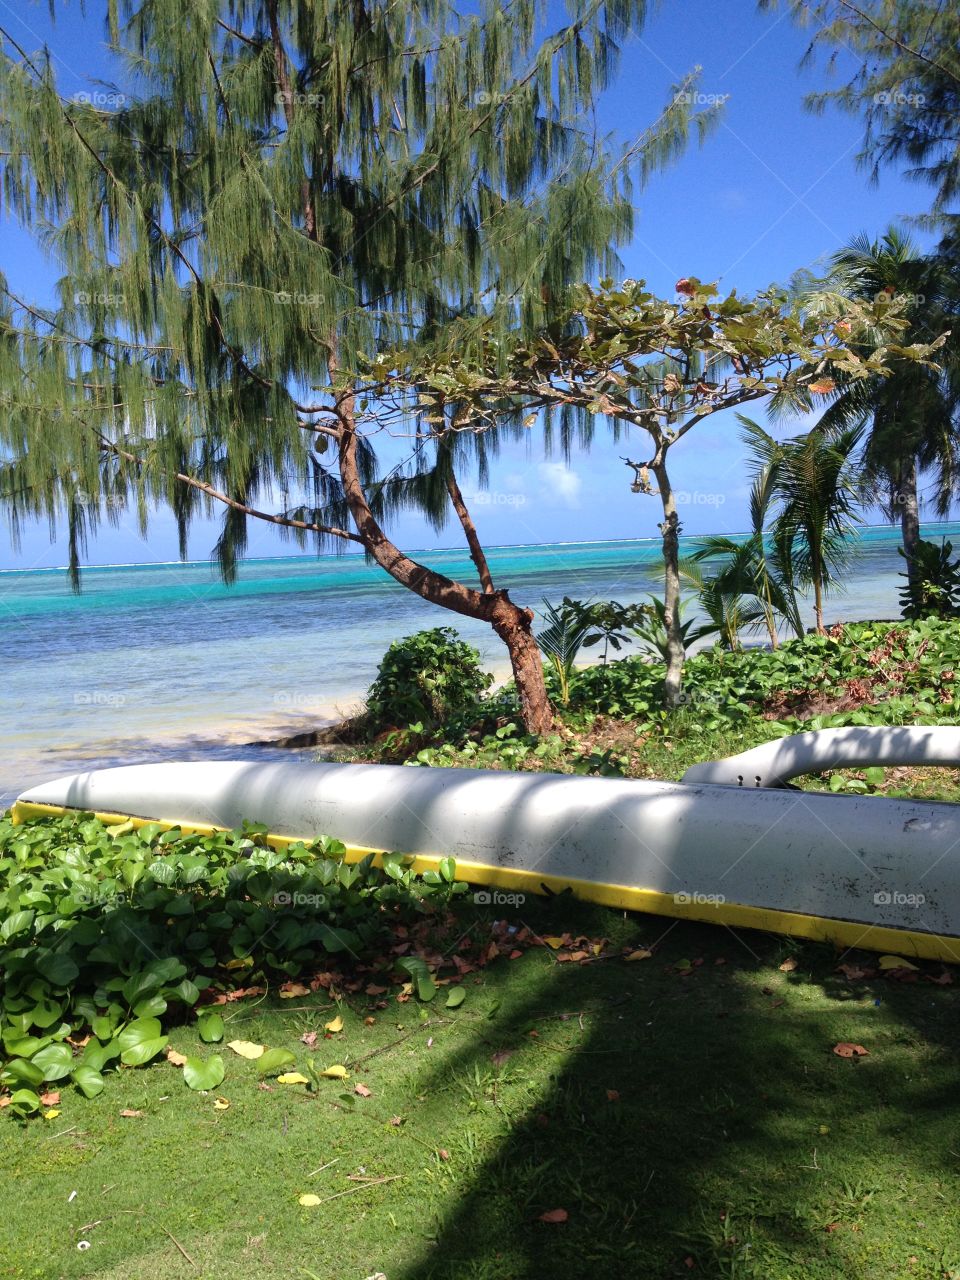 Saipan, Mariana Islands